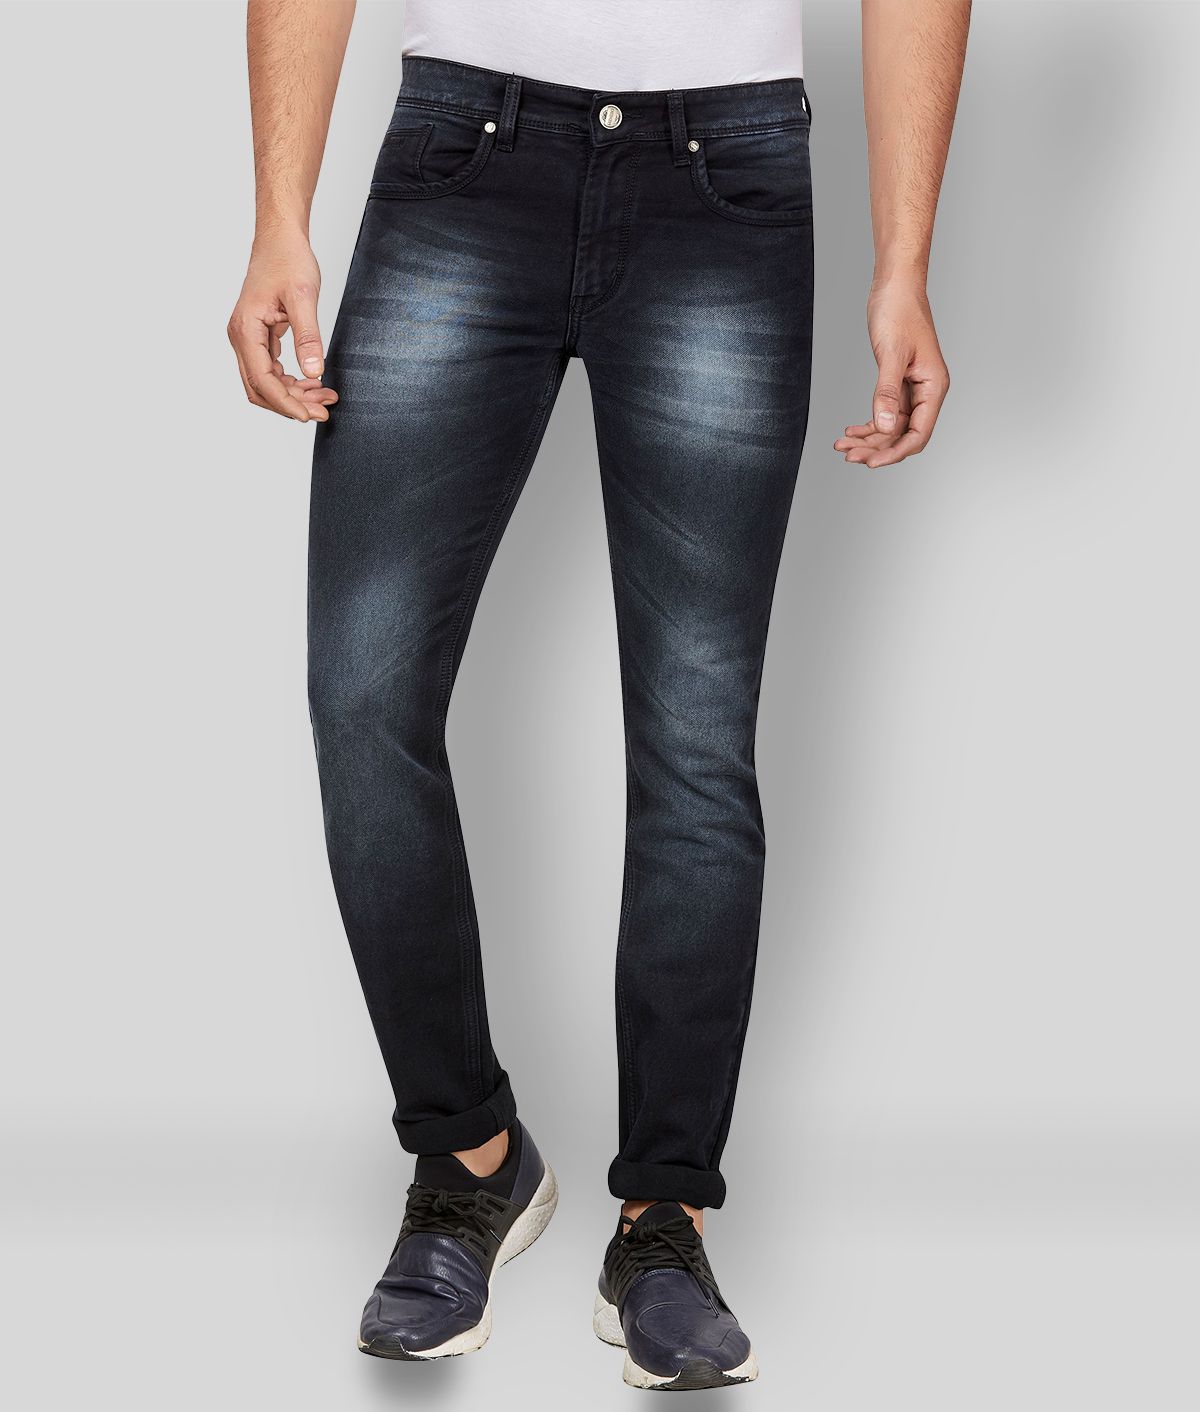 Hasasi Denim - Black 100% Cotton Regular Fit Men's Jeans ( Pack of 1 )